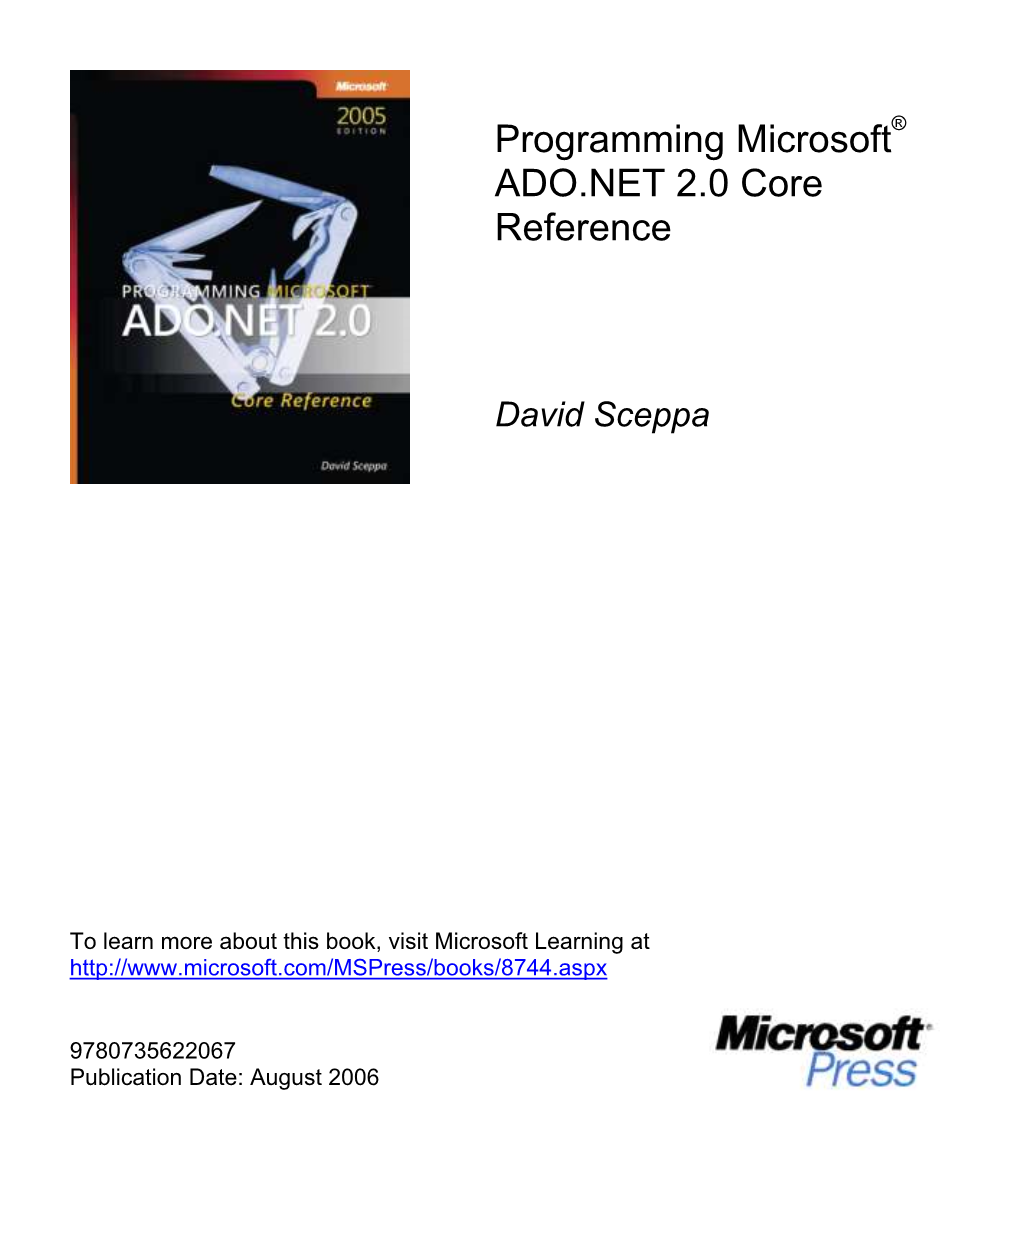 Sample Content from Programming Microsoft ADO.NET 2.0 Core